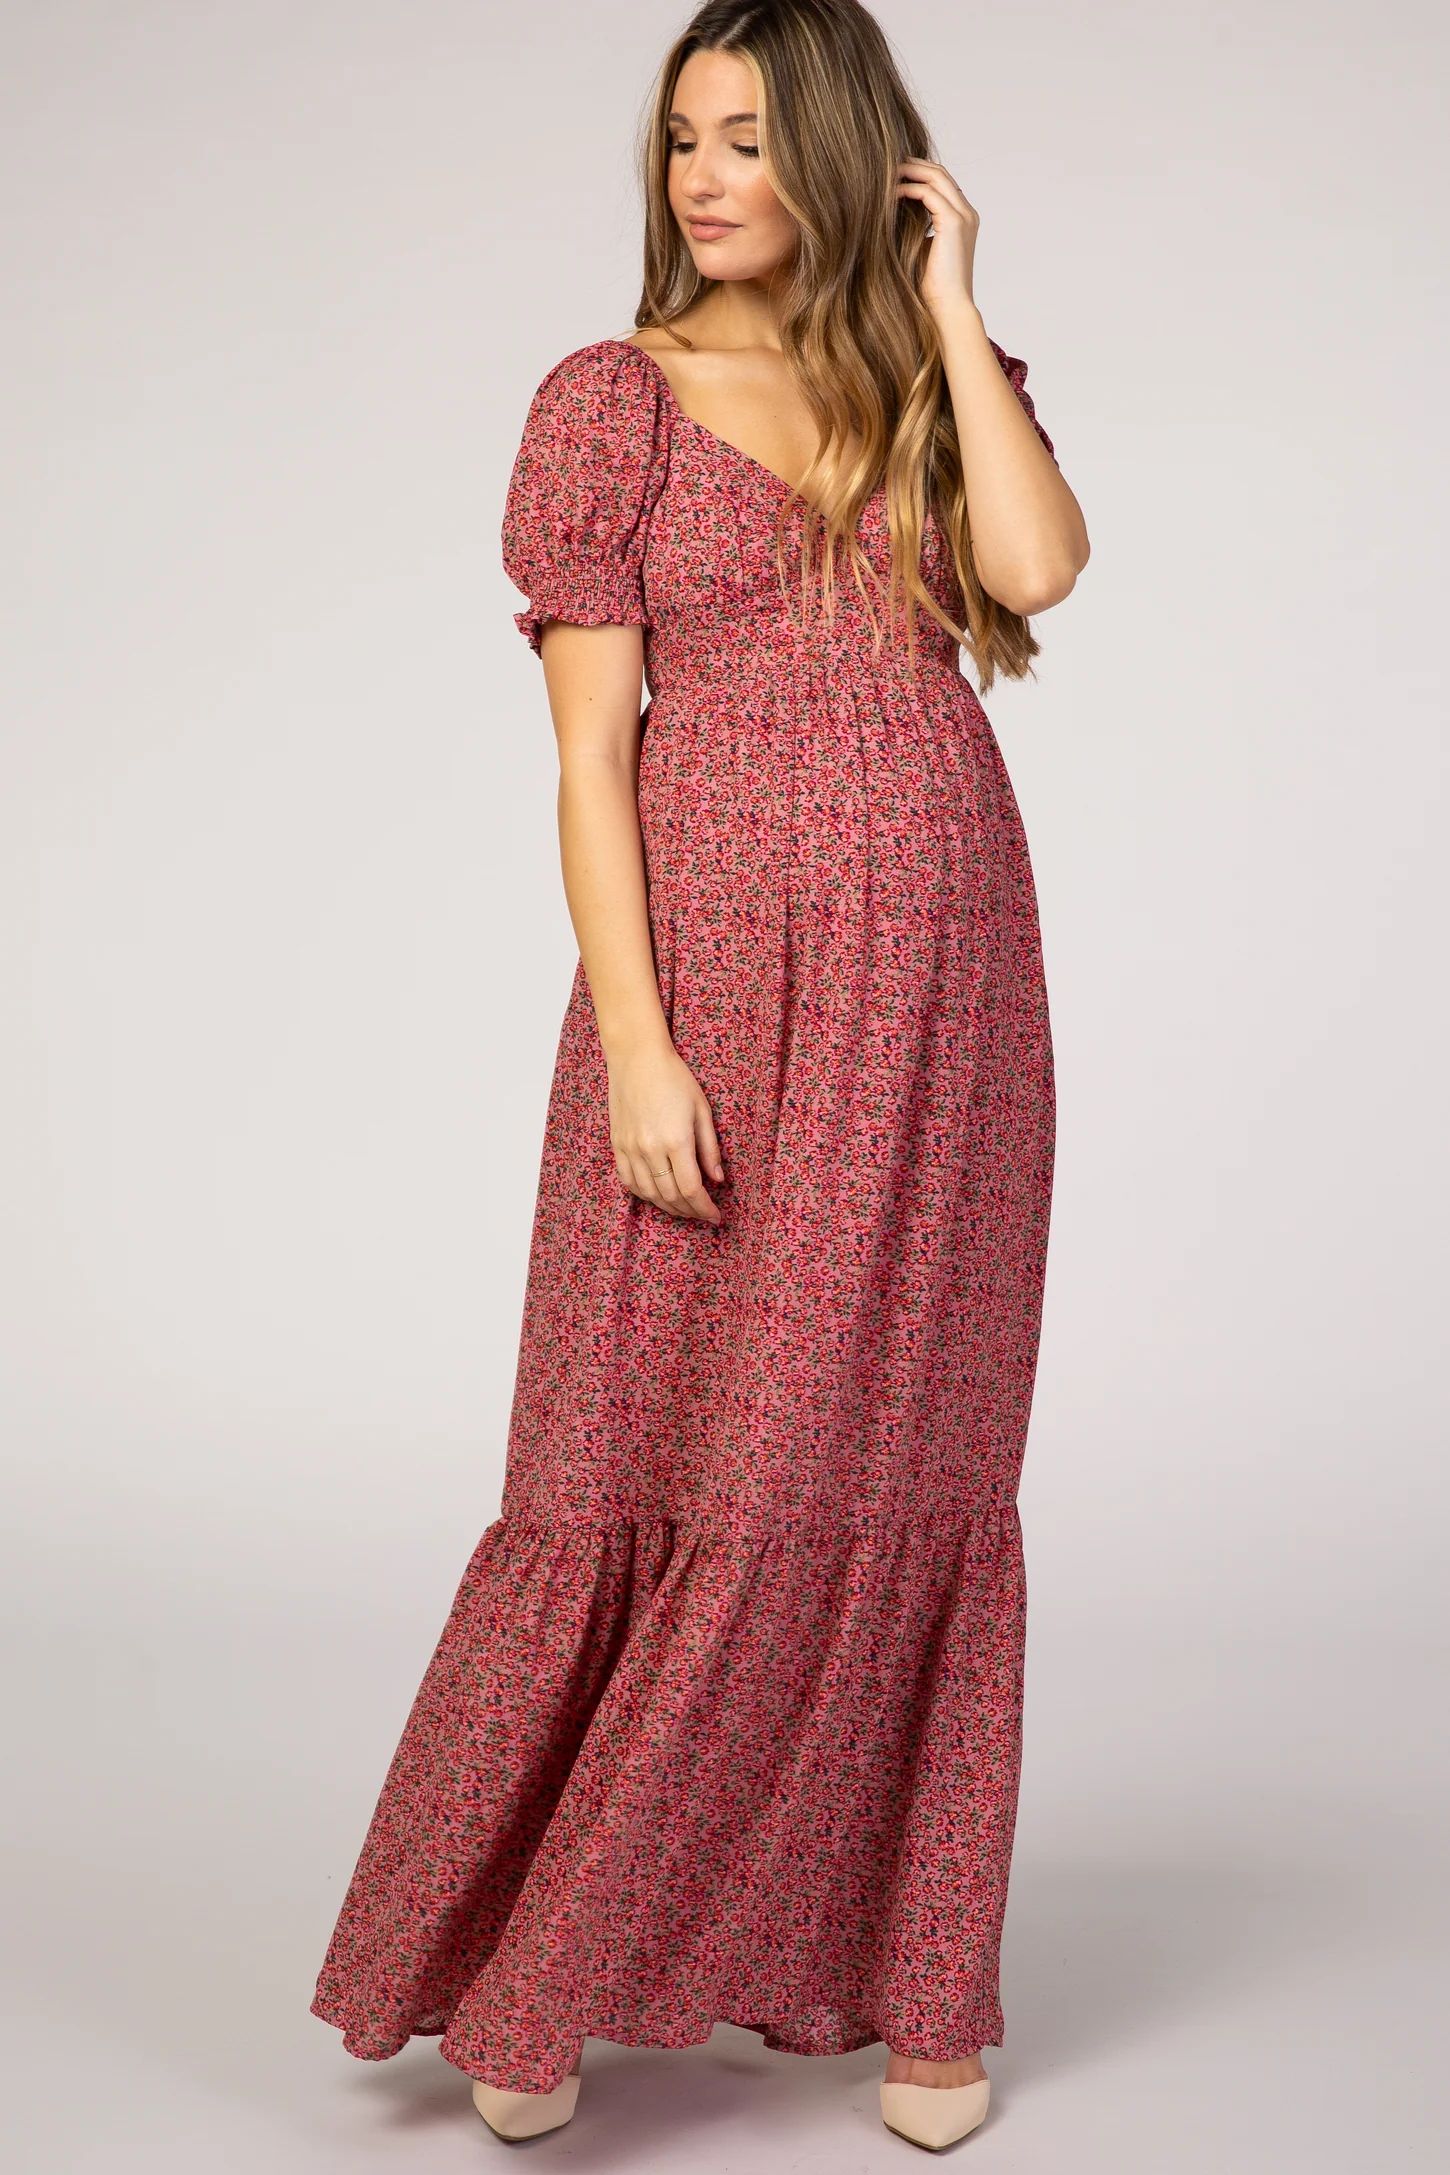 Pink Floral Puff Sleeve Maternity Maxi Dress | PinkBlush Maternity